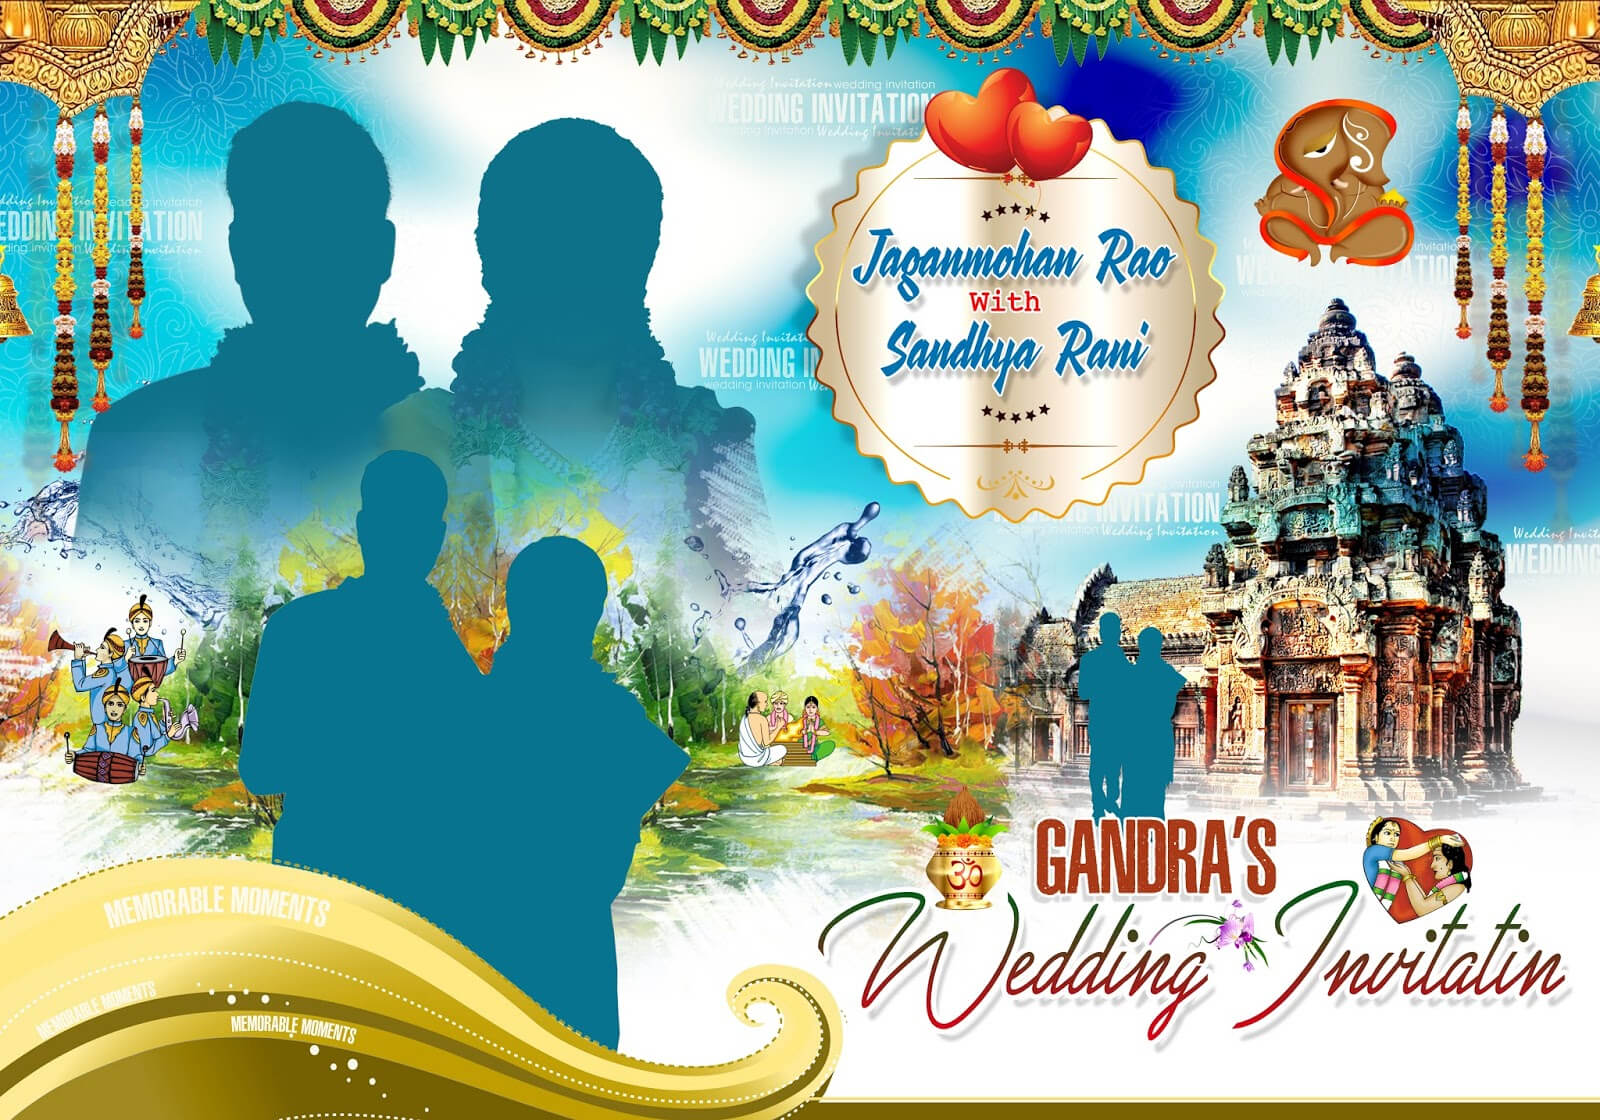 Indian Wedding Banners Psd Template Free Downloads | Naveengfx Throughout Wedding Banner Design Templates